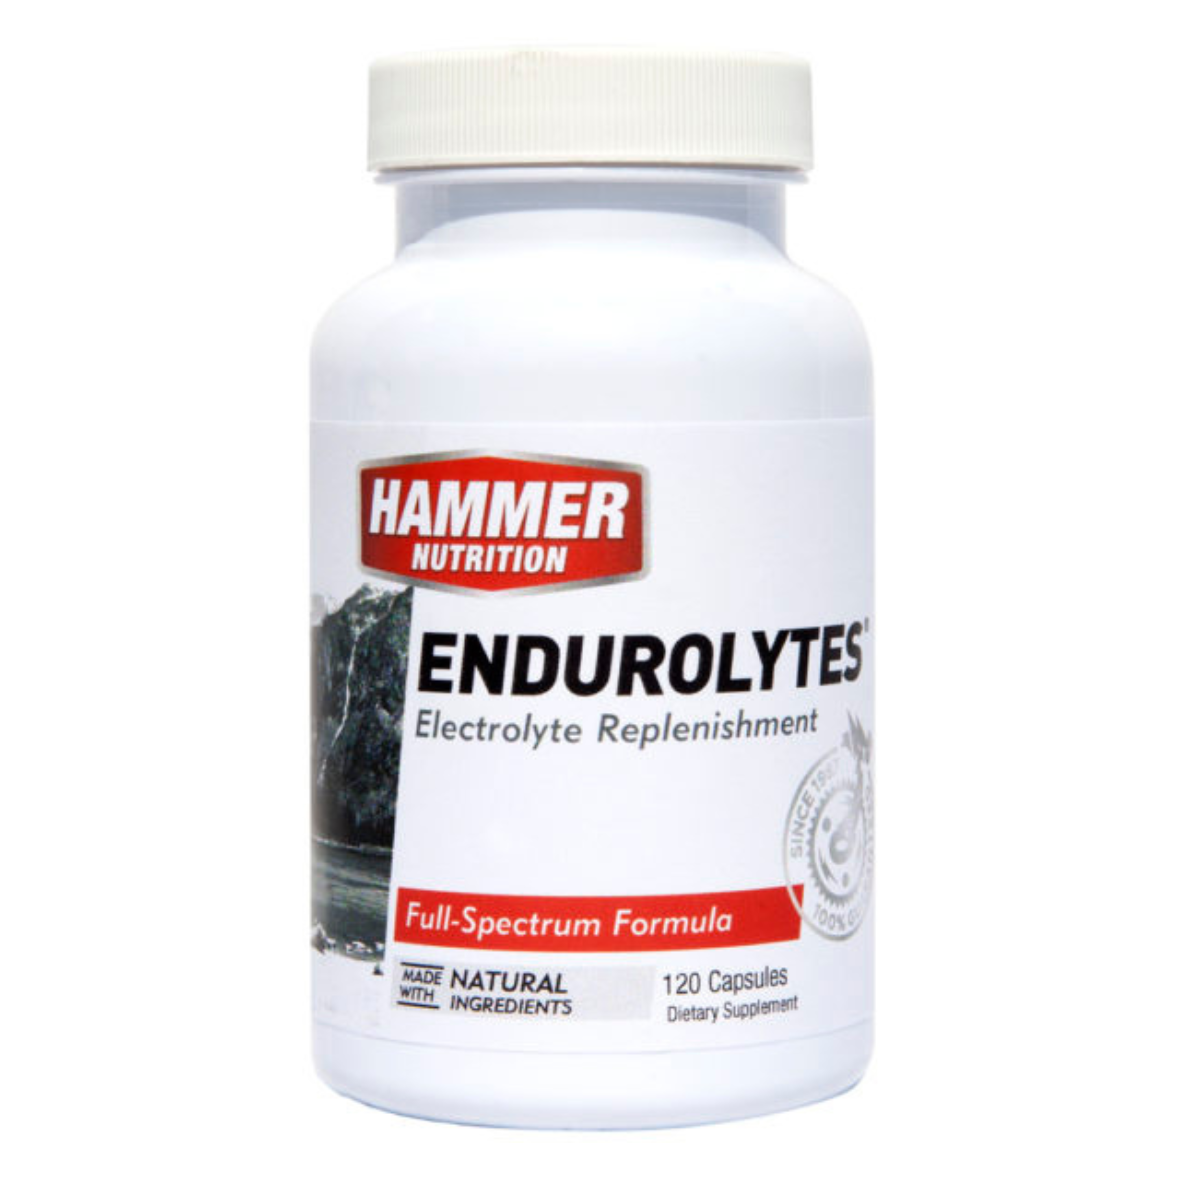 Hammer Nutrition Endurolytes electrolyte replacement